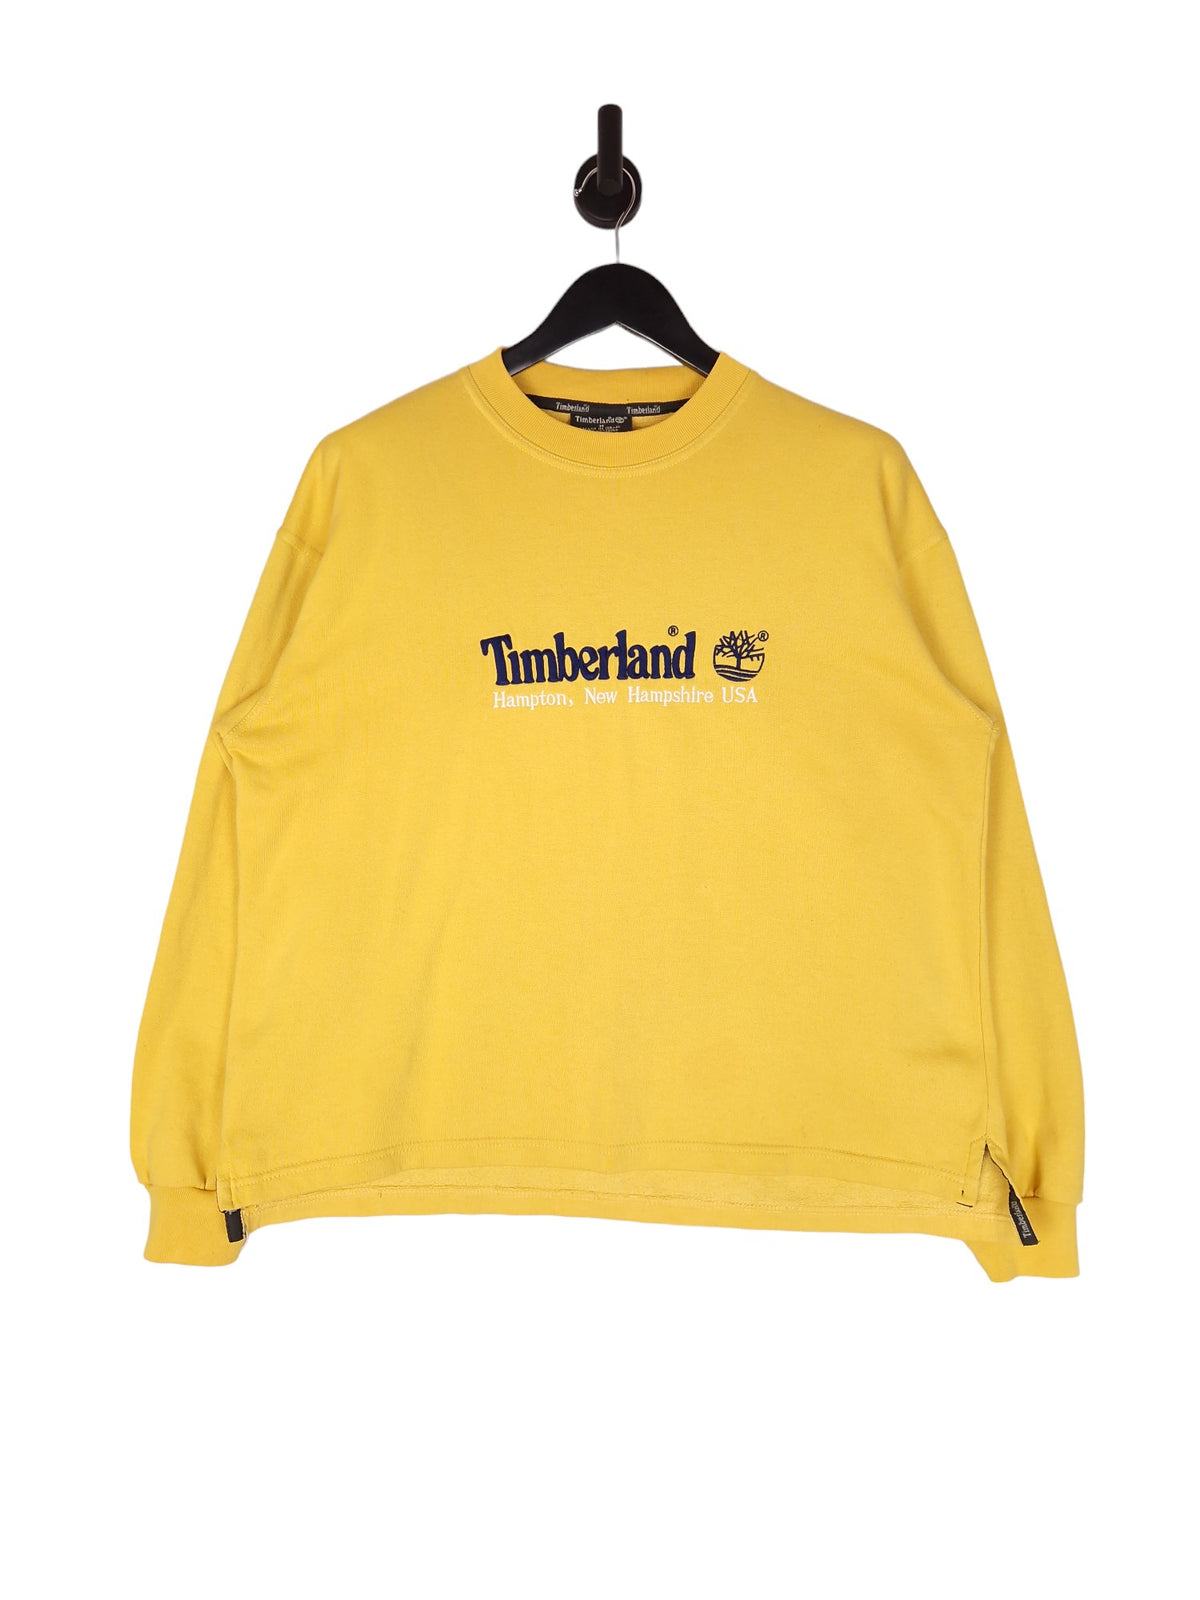 90's Timberland Spell Out Sweatshirt - Size Medium (oversized)